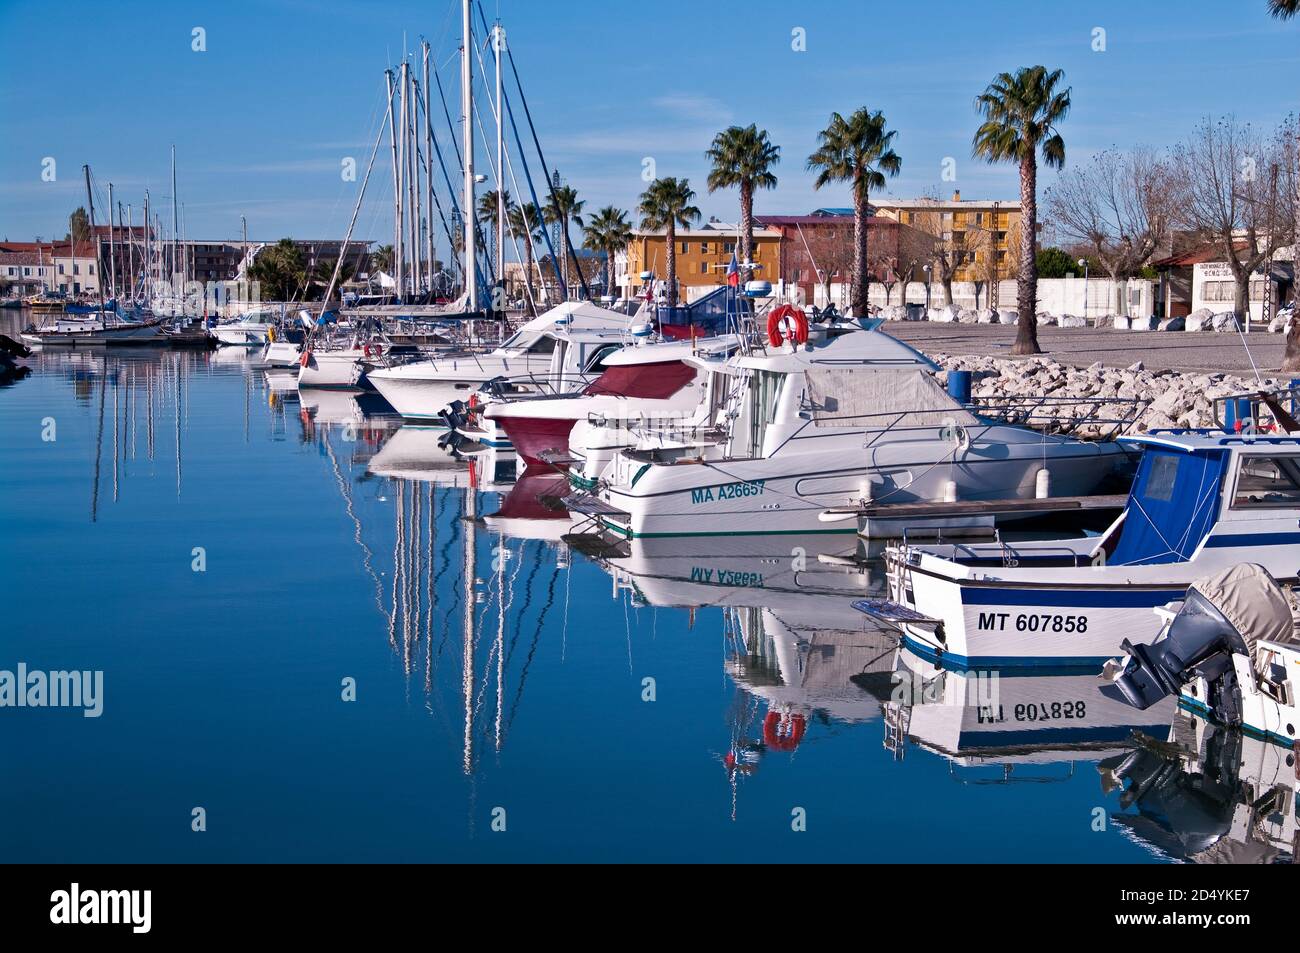 Camargue : Marina (Port Saint Louis du Rhône Stock Photo - Alamy